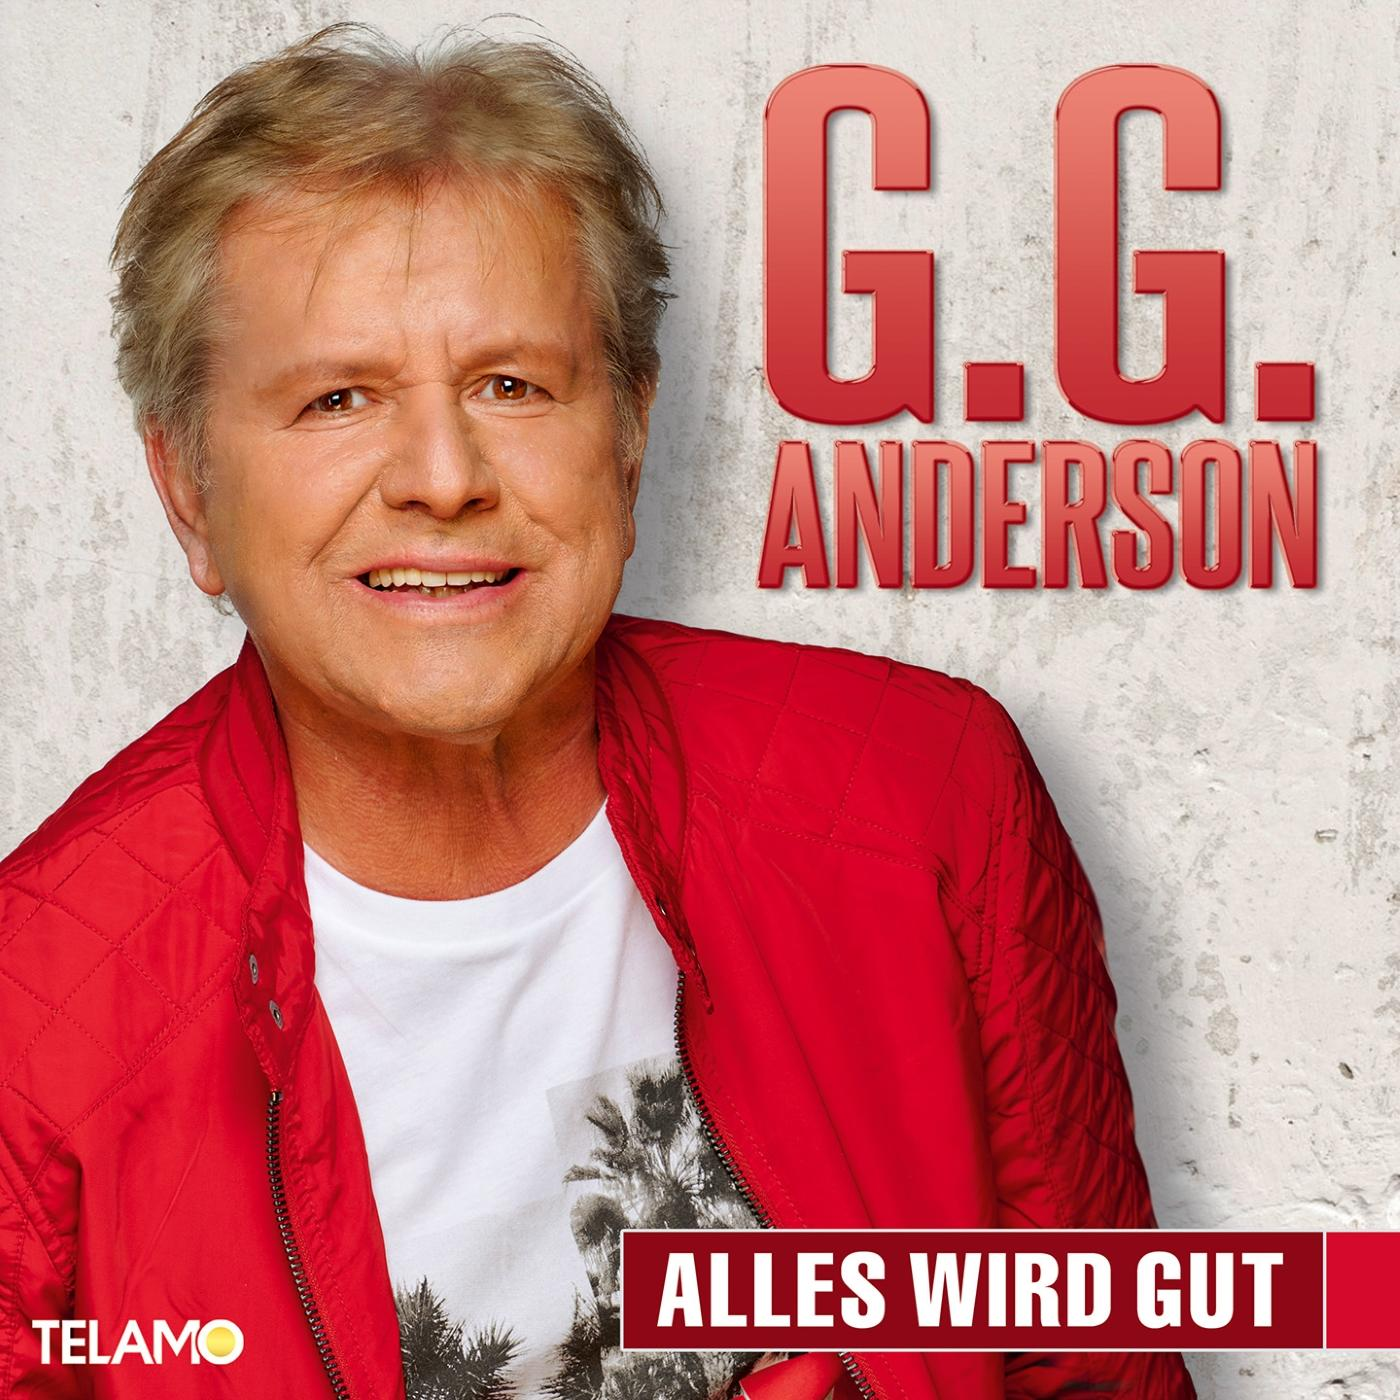 Anderson - - Alles gut wird G.G. (CD)